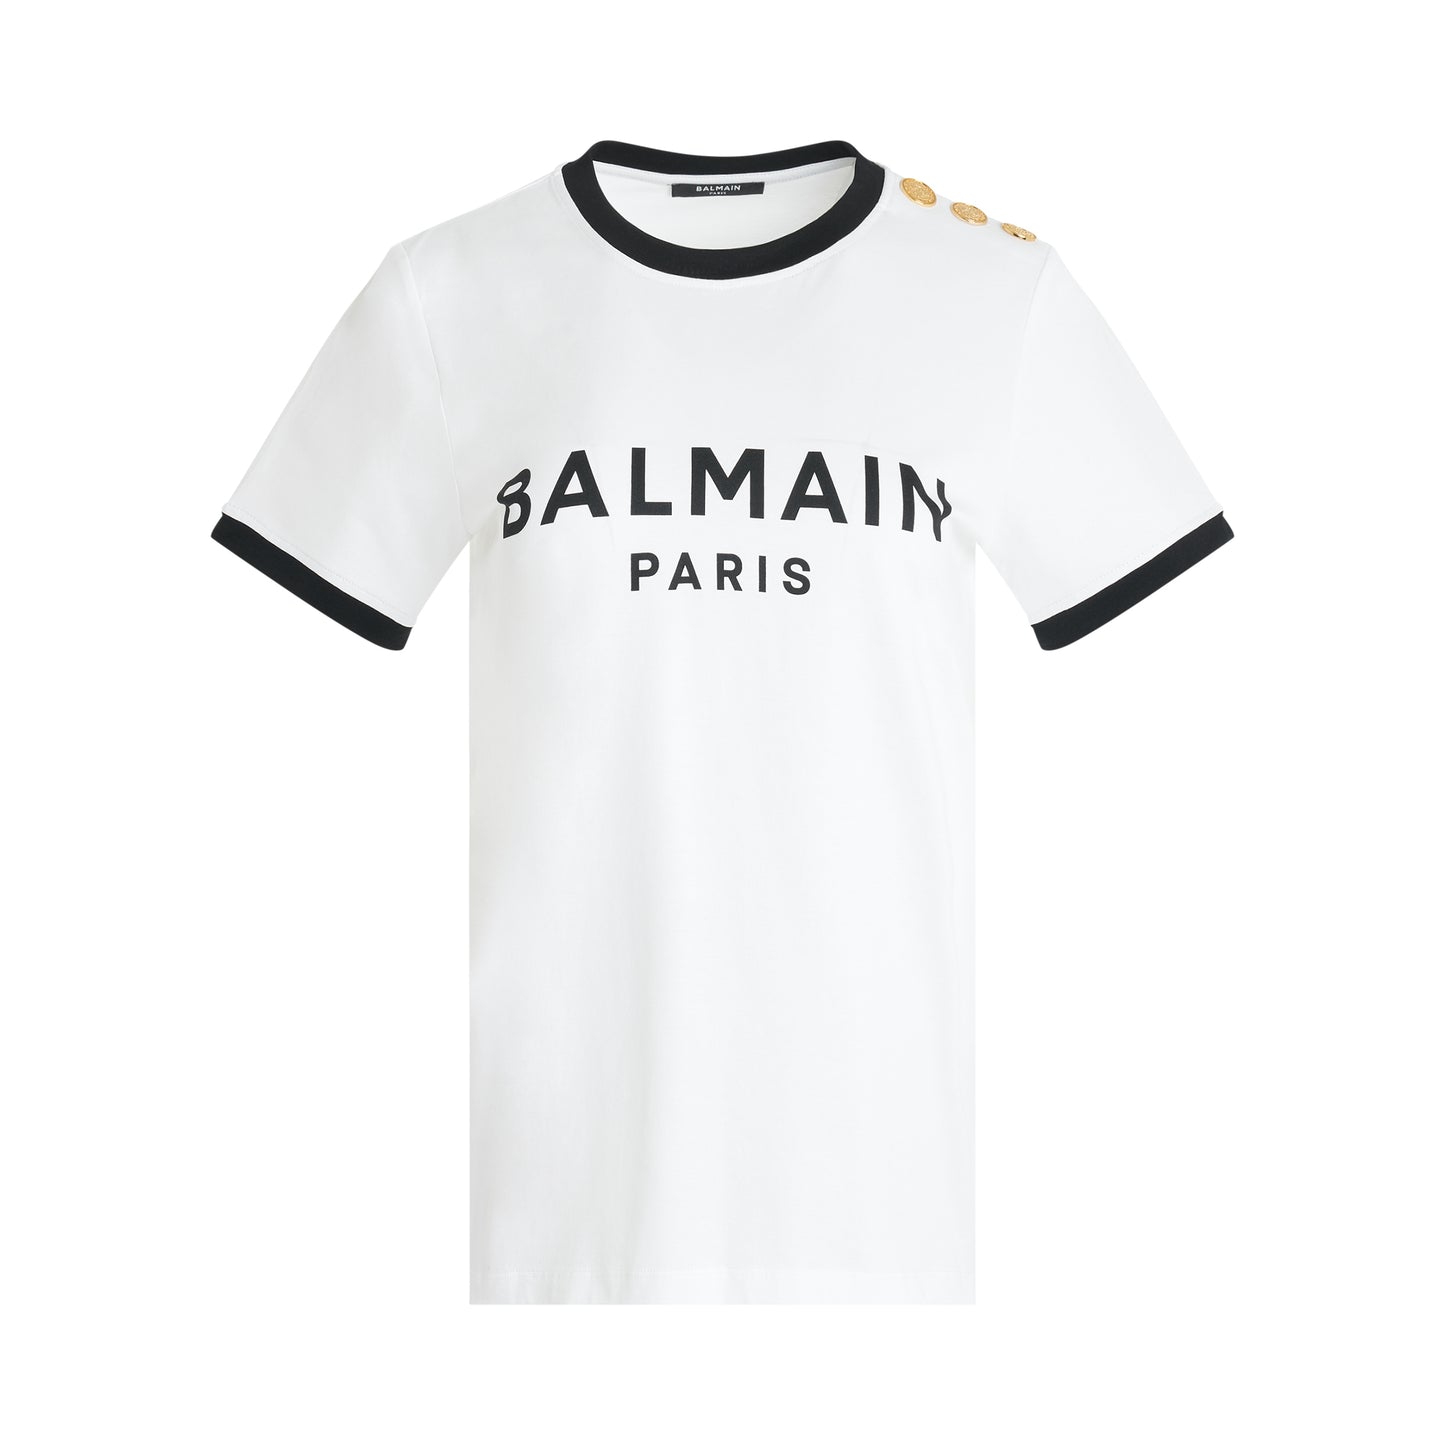 3 Button Balmain Print Bicolour T-Shirt in White/Black